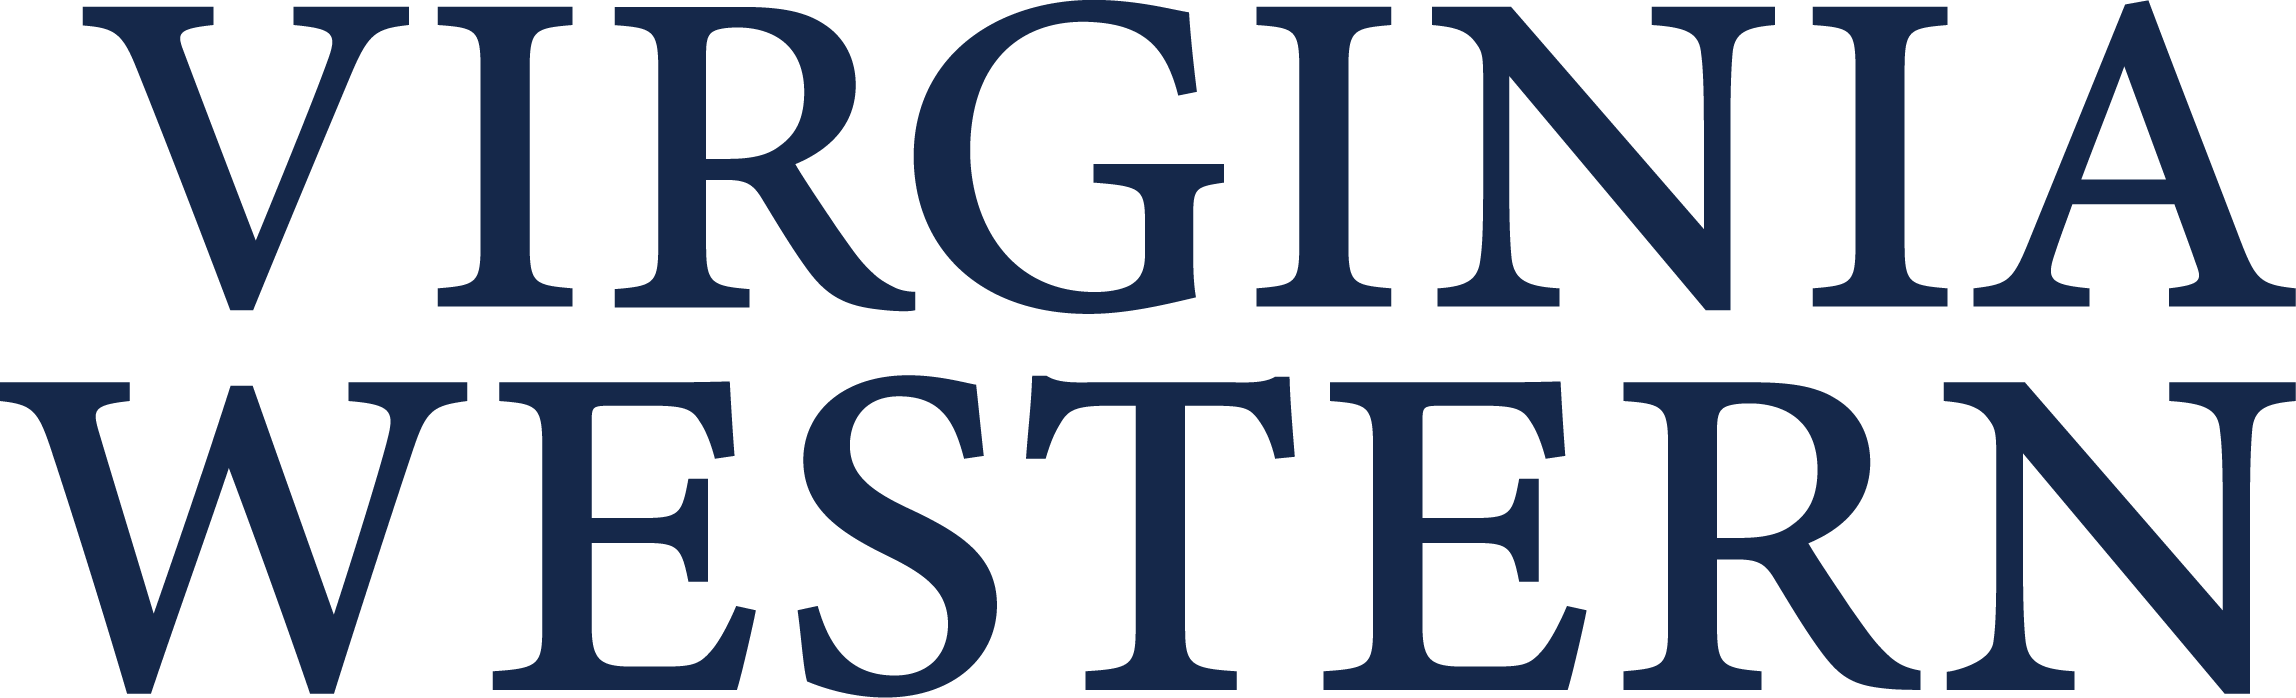 Virginia Western Logo